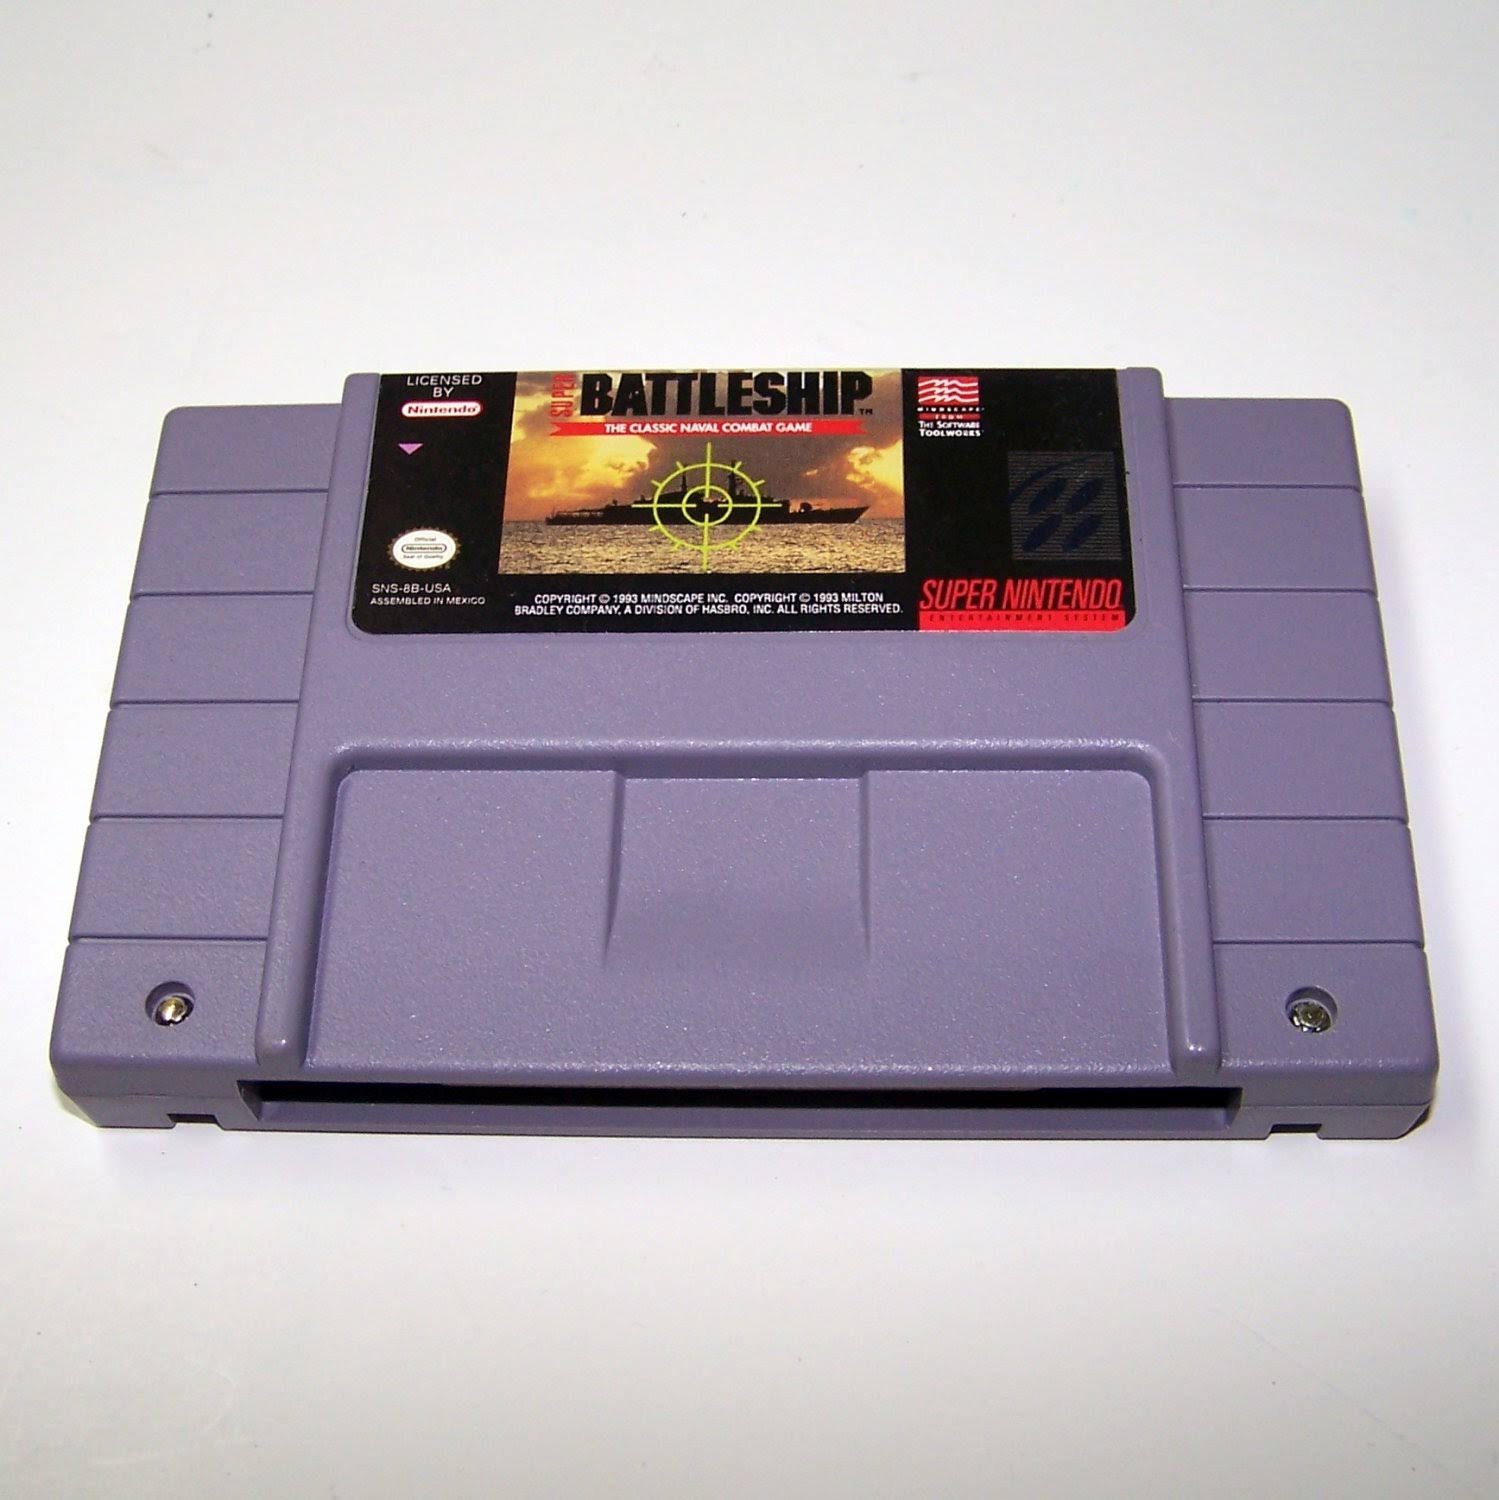 Super Battleship - Super Nintendo Entertainment System